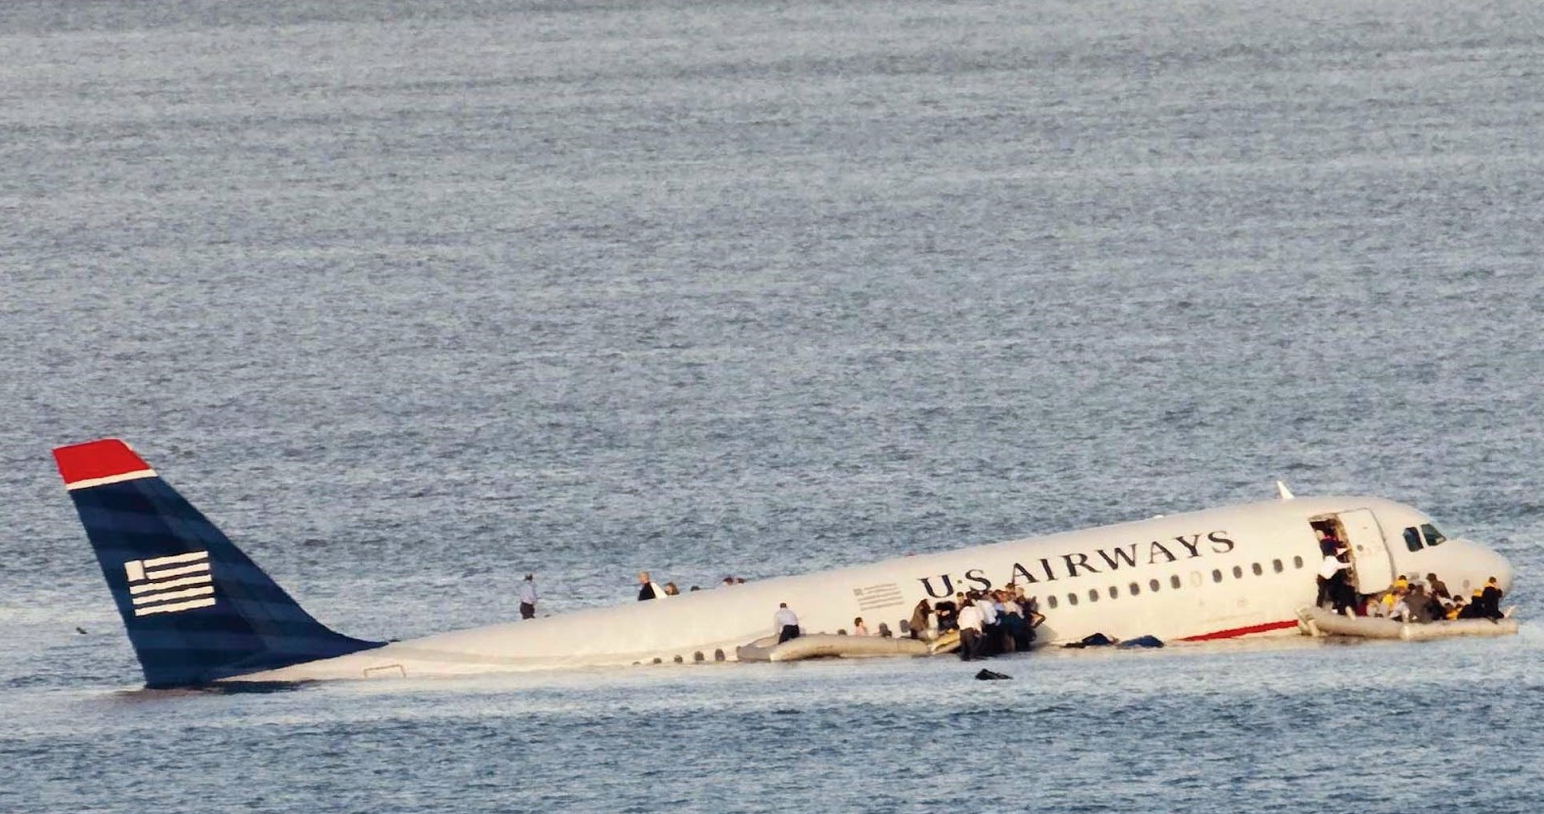 Самолет приземляющийся на воду. Аварийная посадка a320 на Гудзон. Us Airways Flight 1549. Авиакатастрофа на Гудзоне 2009. 15 Января 2009 авиакатастрофа Гудзон.